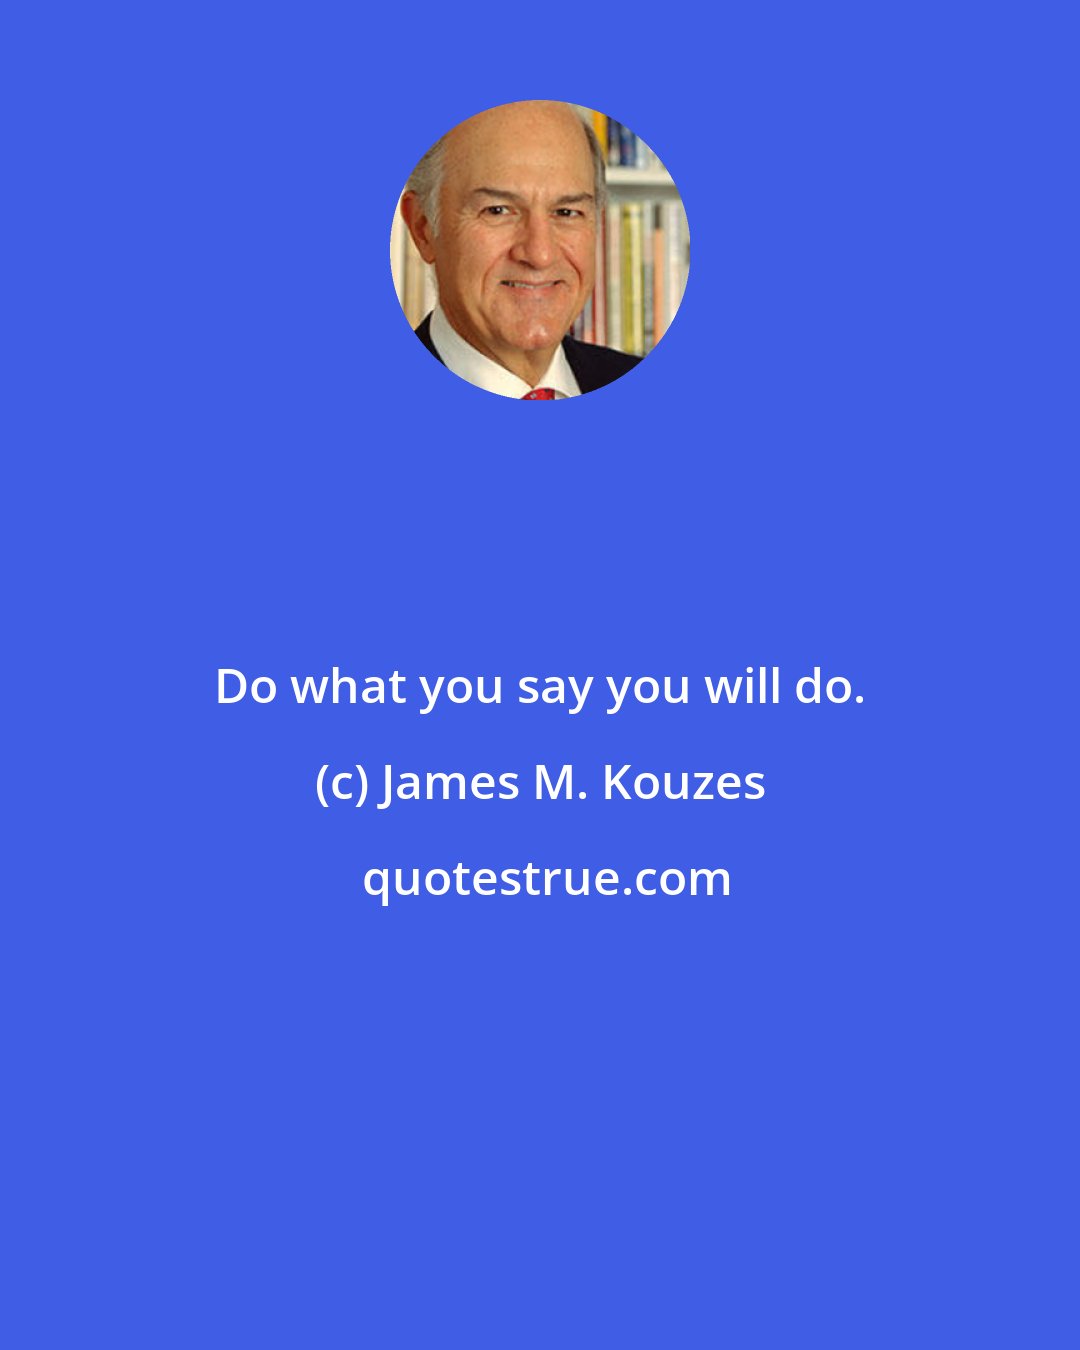 James M. Kouzes: Do what you say you will do.